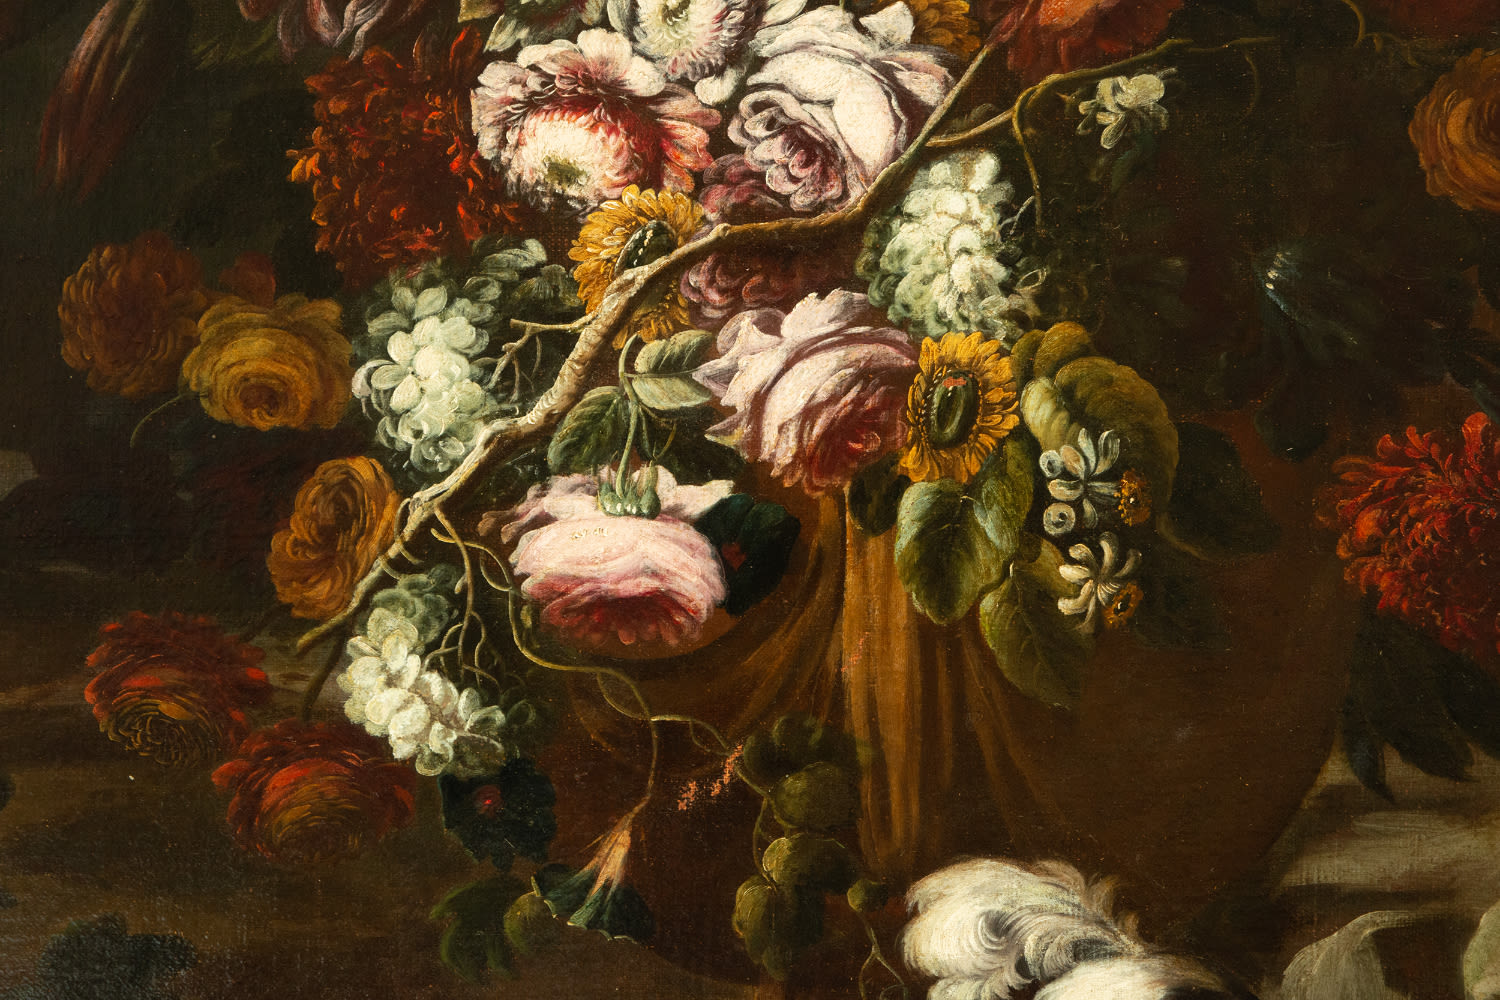 Nicola Casissa, "Still Life with Flowers and Dog", 17th century Italian school - Image 4 of 8